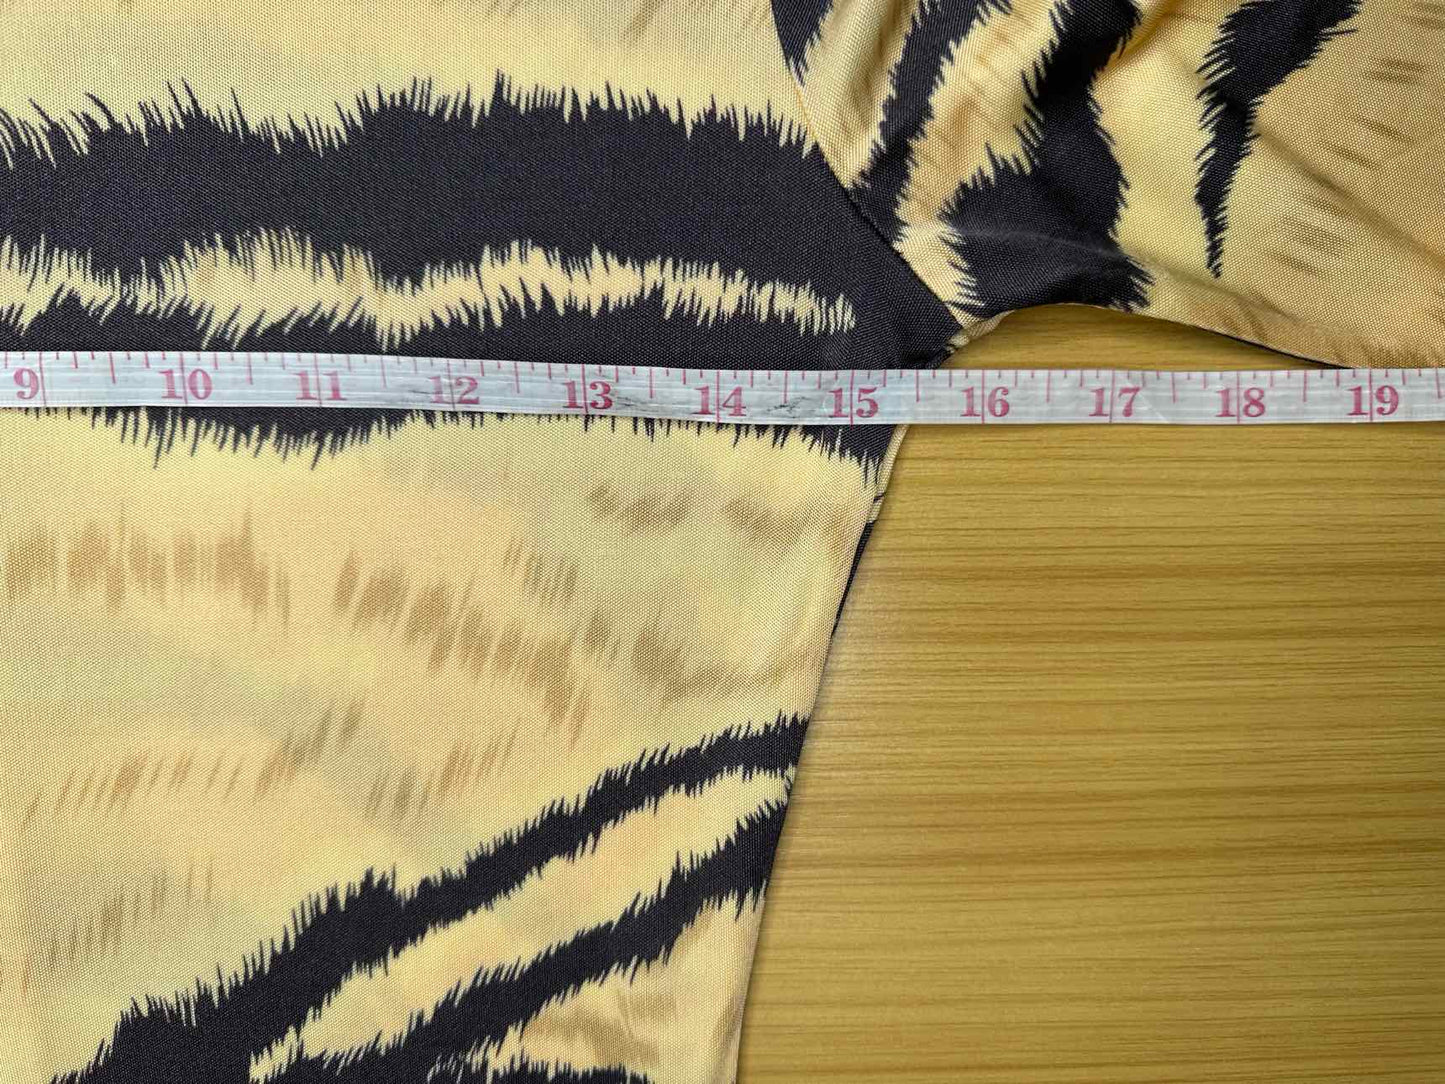 RONNY KOBO Yellow Zebra Print Bodysuit Size M